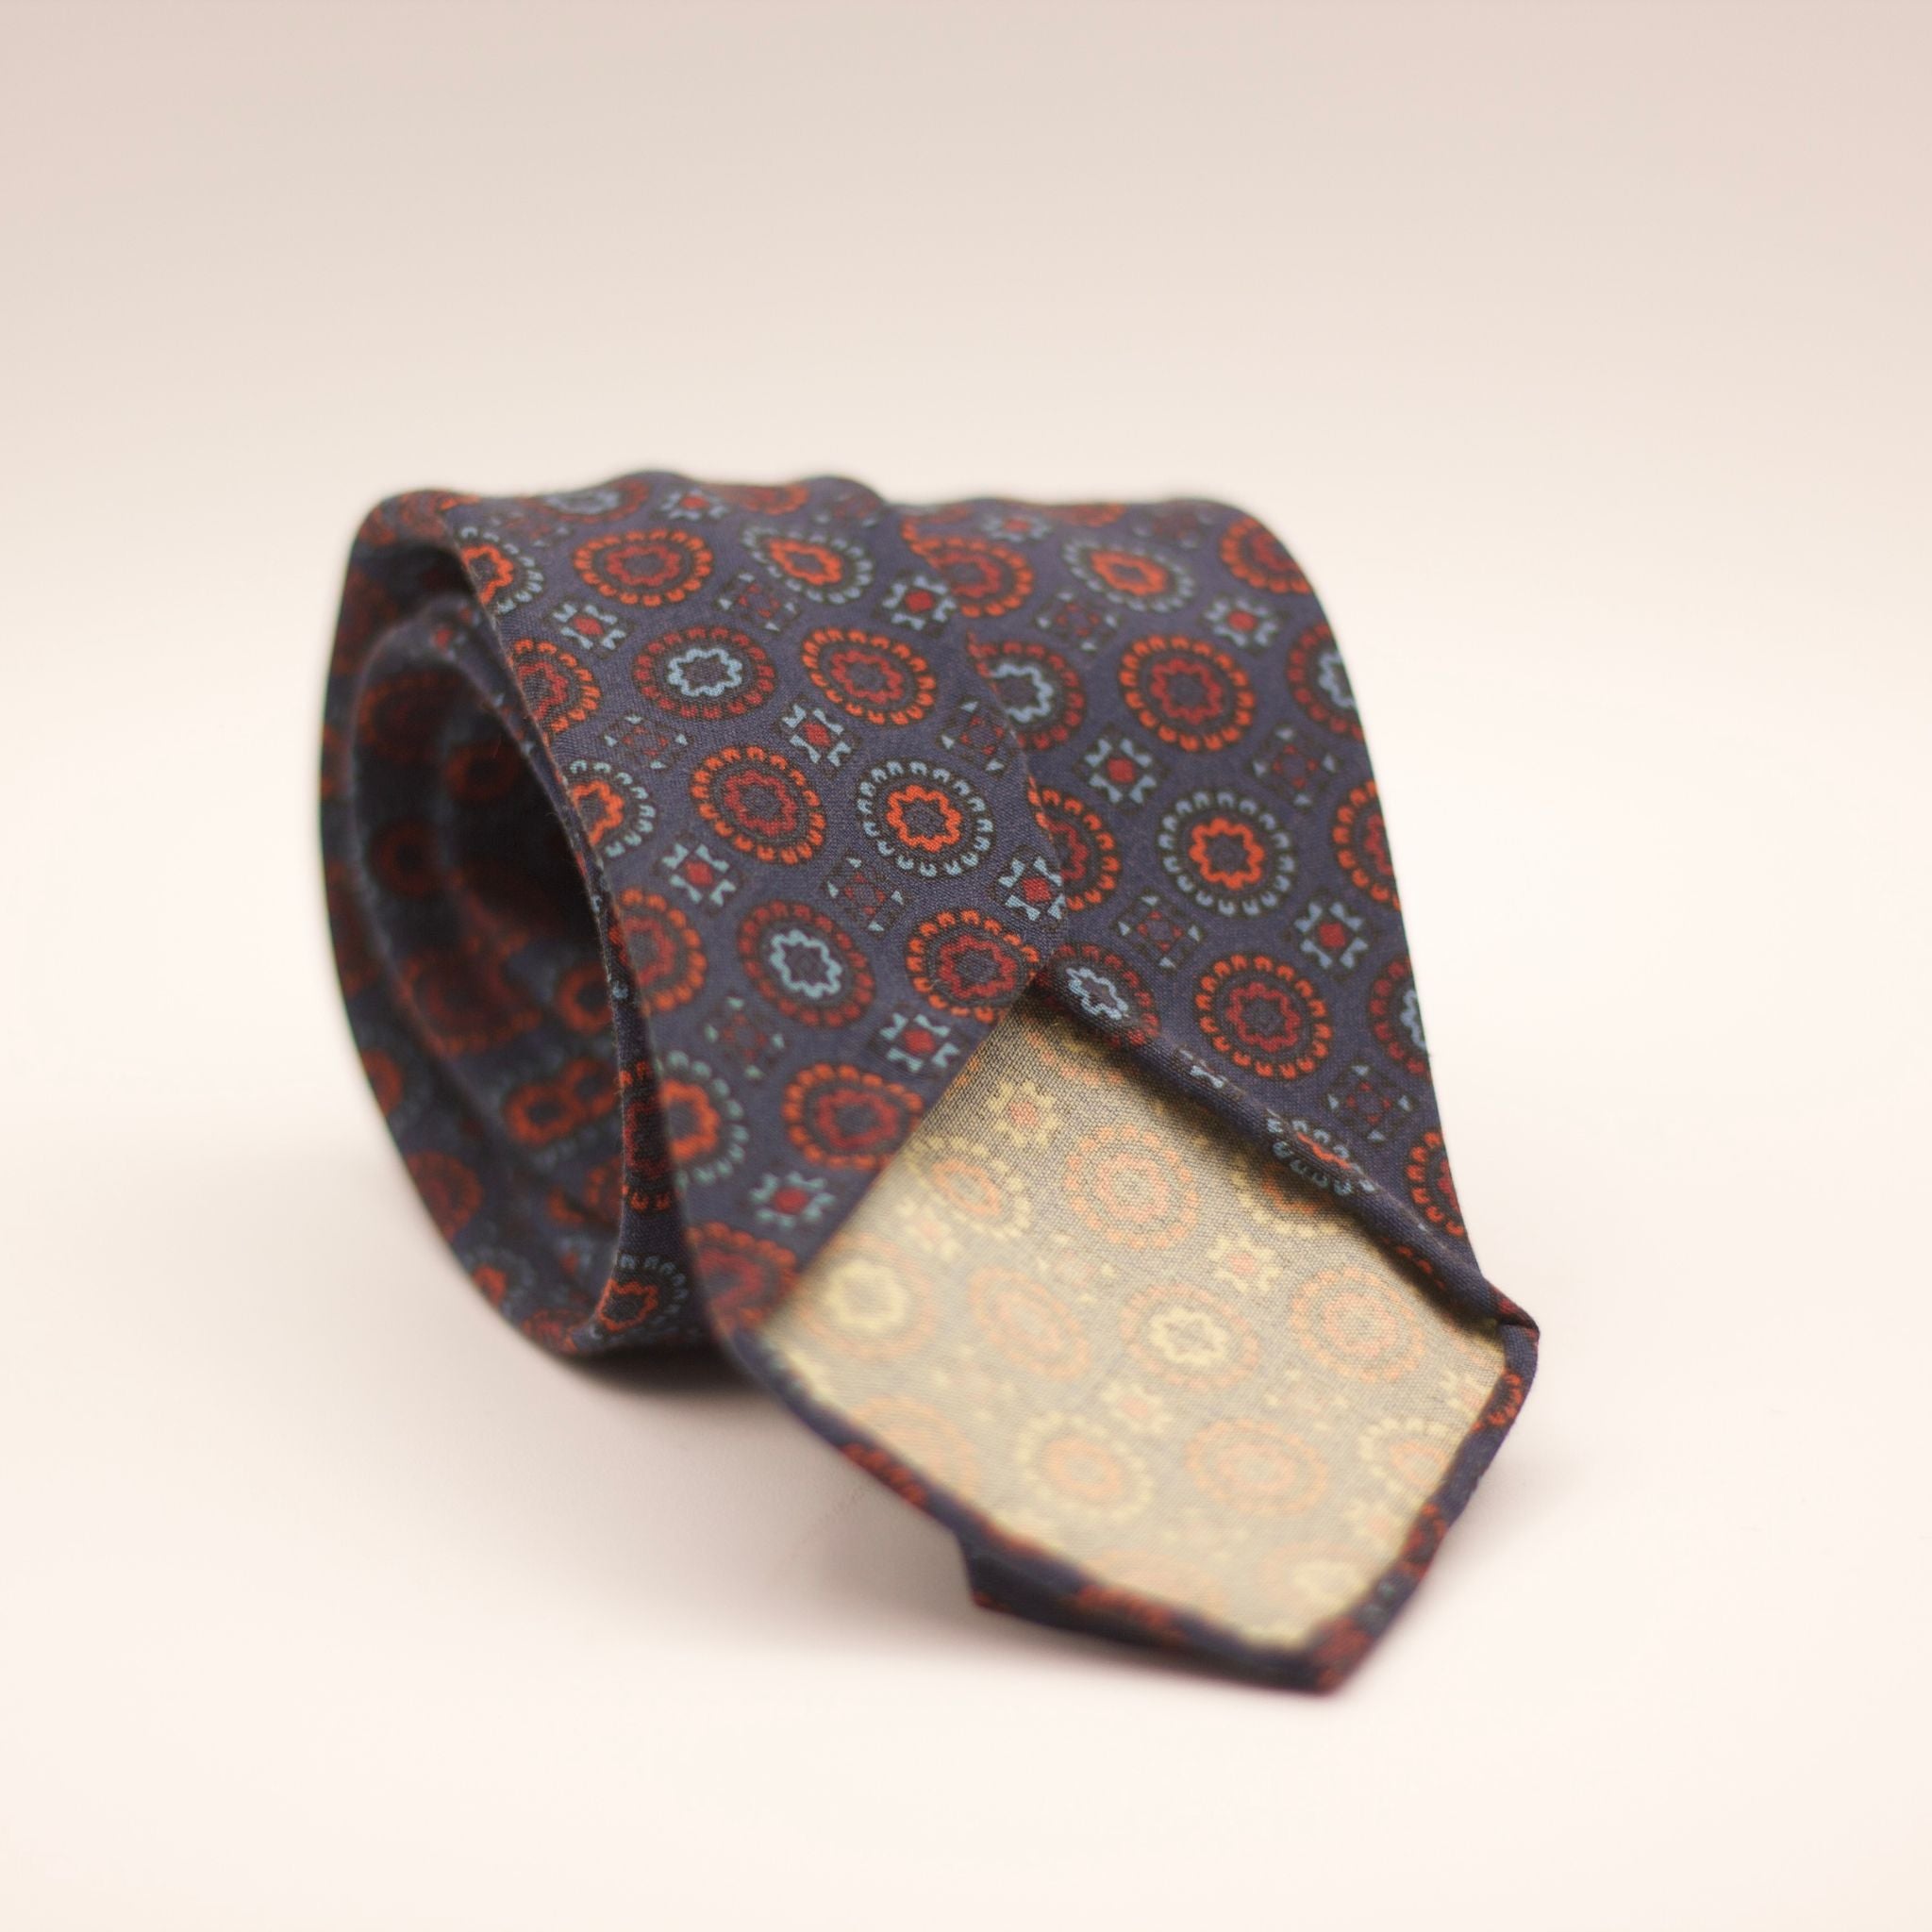 Cruciani & Bella  100% Printed Madder Silk  Italian fabric  Unlined tie  Blue, Light Blue , Red and Orange motif - 8 cm x 150 cm #7499